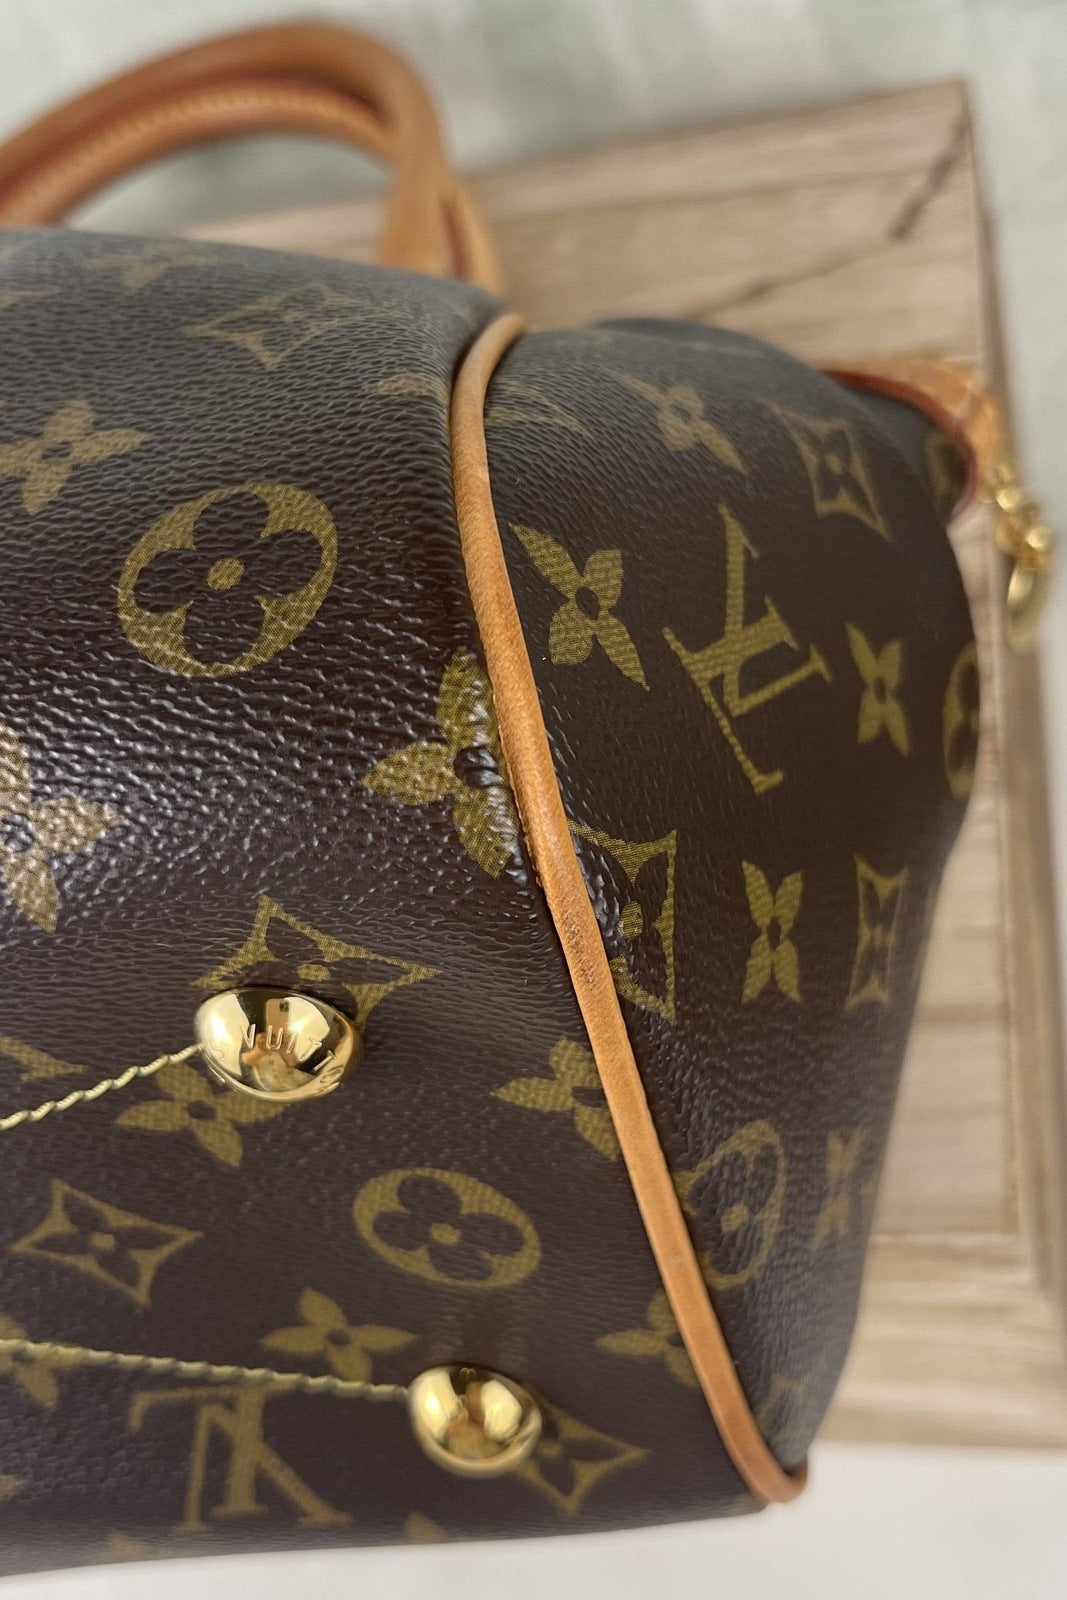 Louis Vuitton, Bags, Bundledlouis Vuitton Tivoli Pm